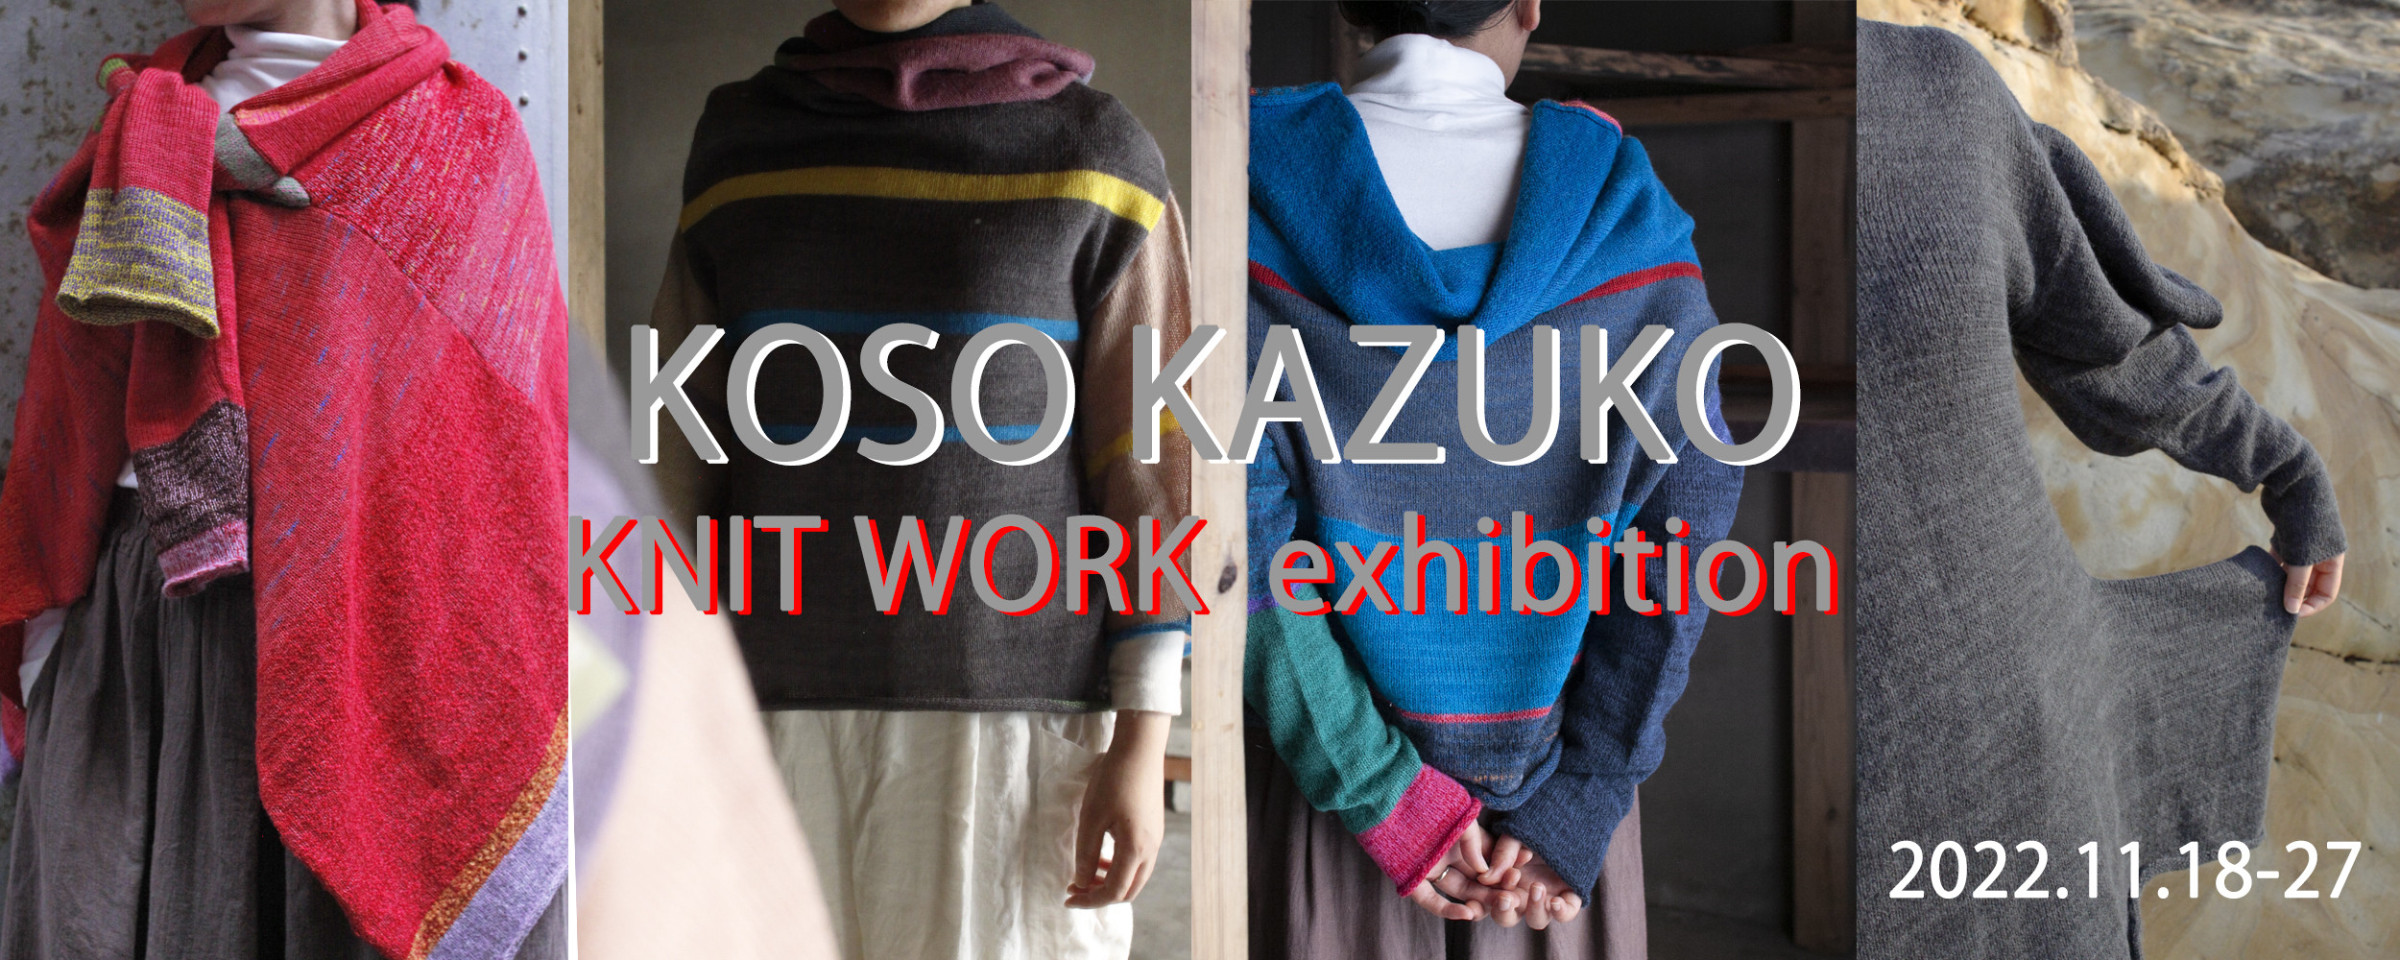 KOSO KAZUKO KNIT WORK exhibition